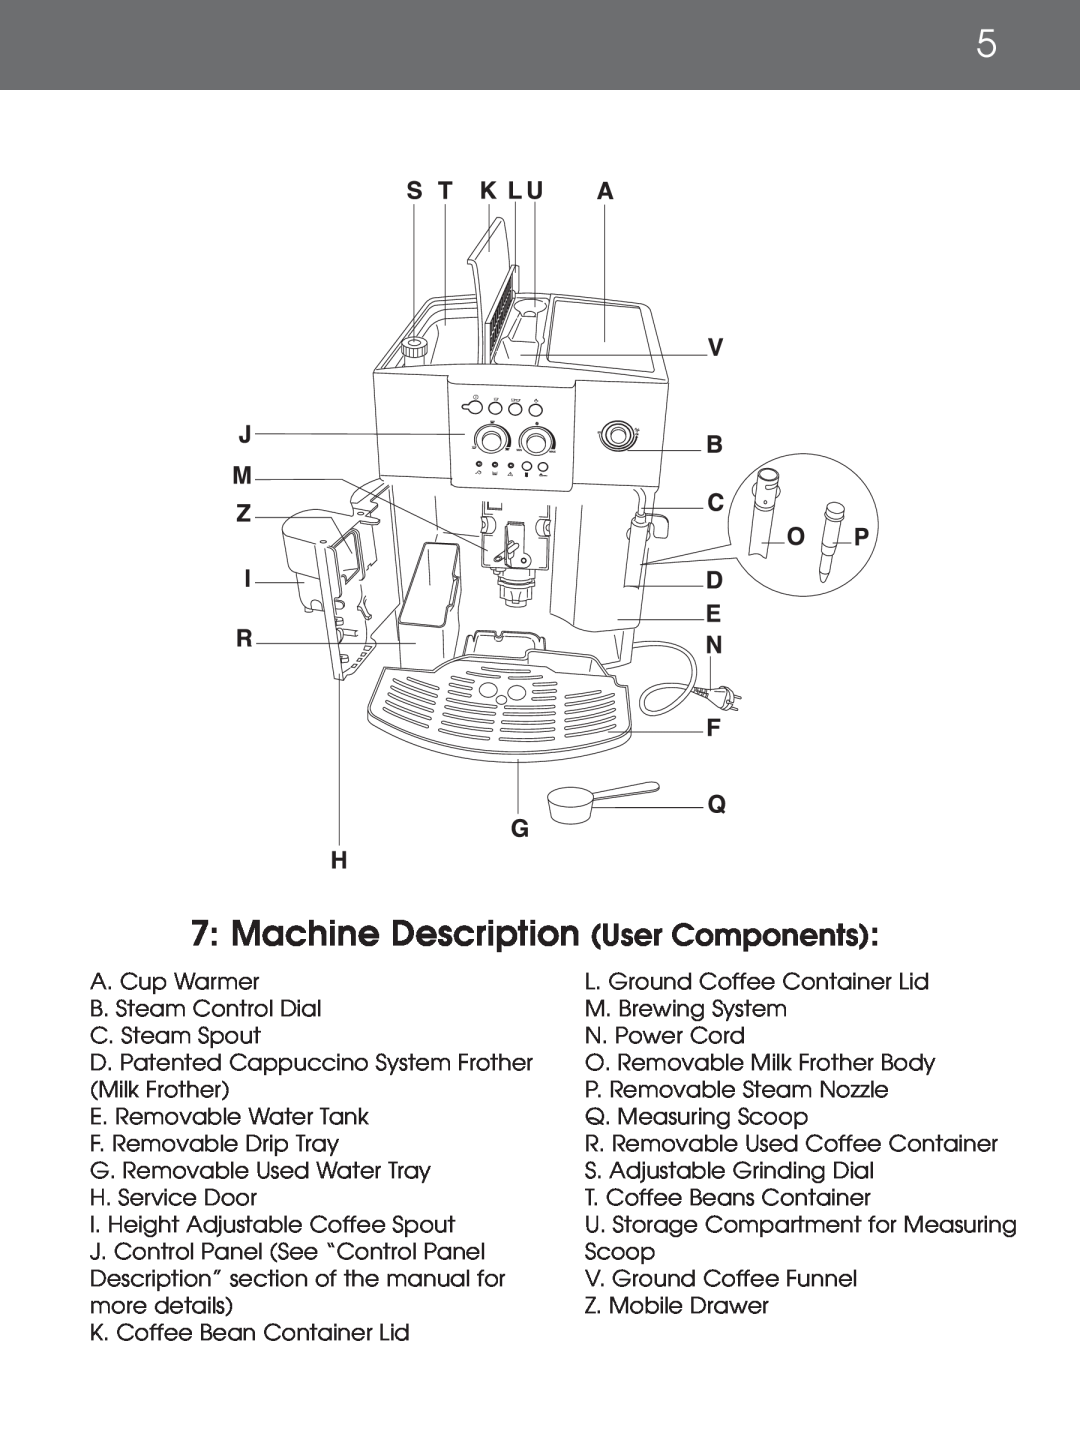 DeLonghi EAM4000 instruction manual 7: Machine Description User Components 